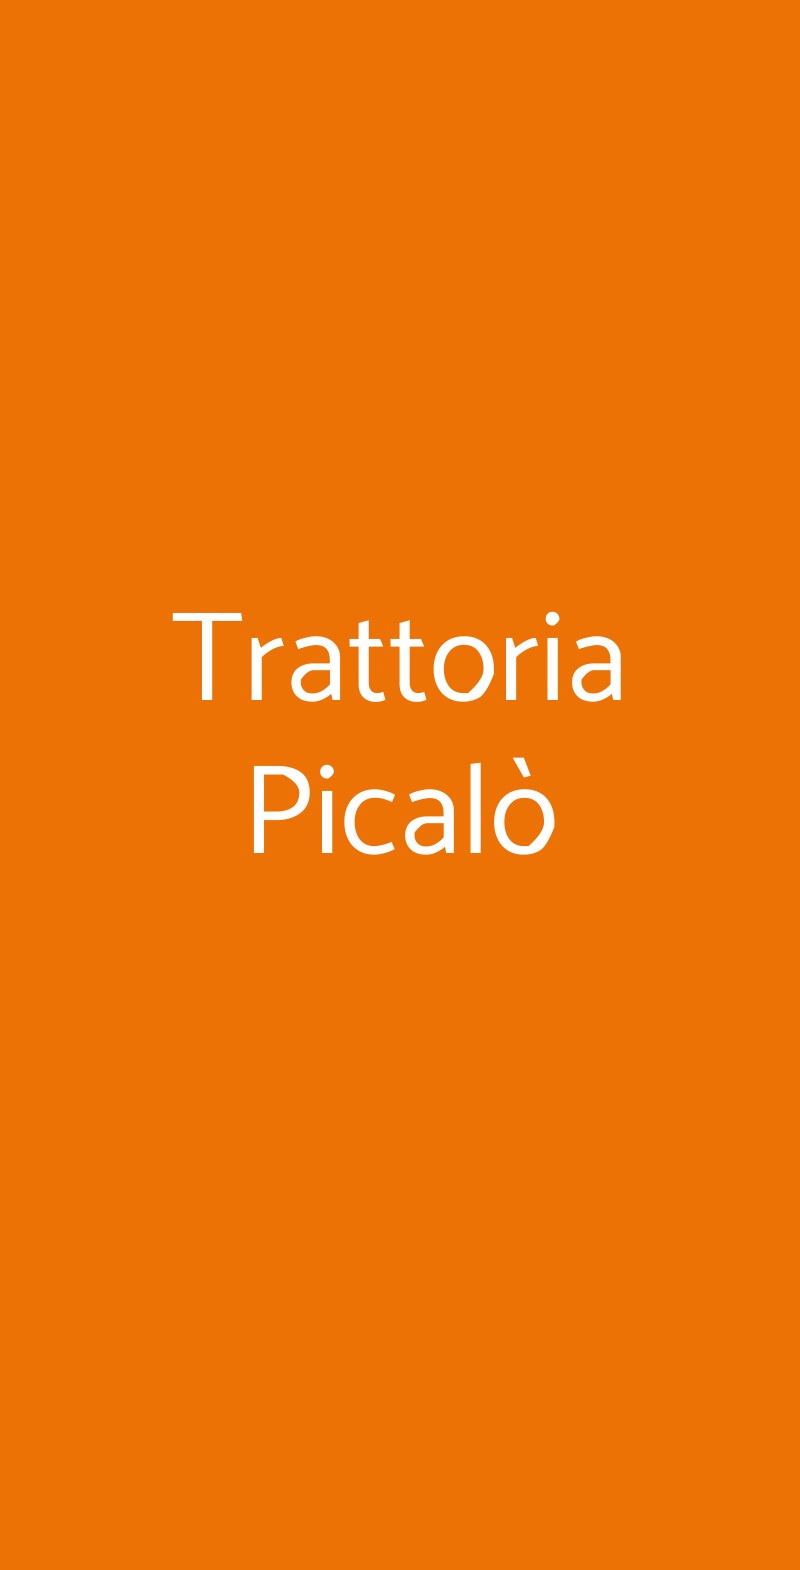 Trattoria Picalò Spongano menù 1 pagina